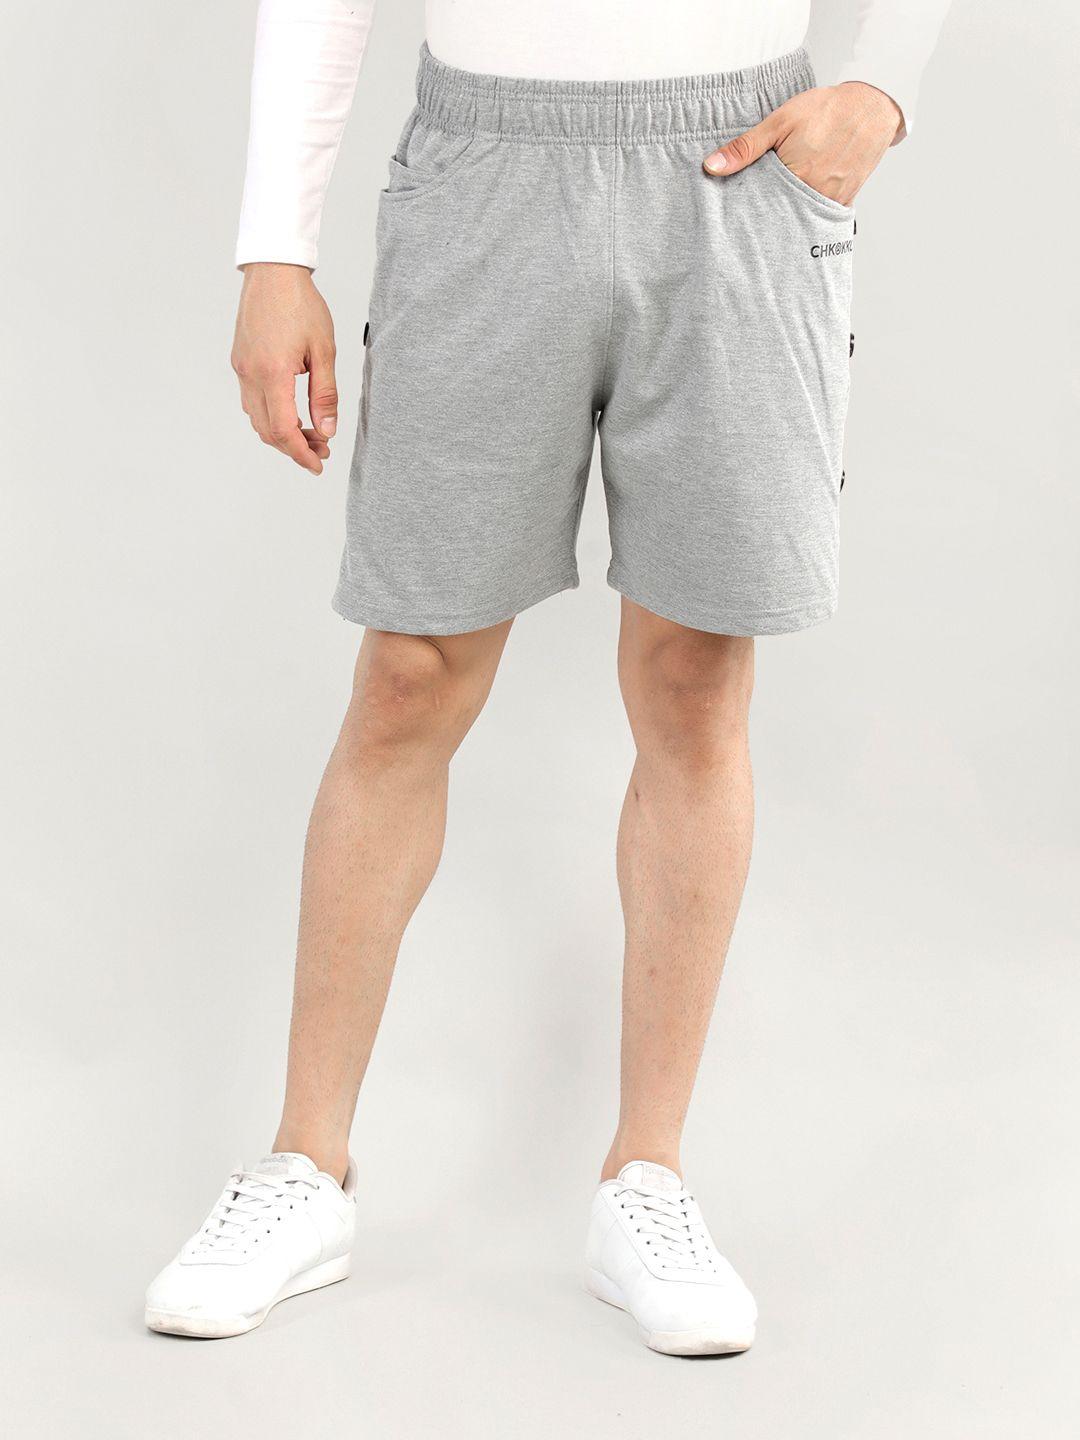 chkokko men grey outdoor shorts